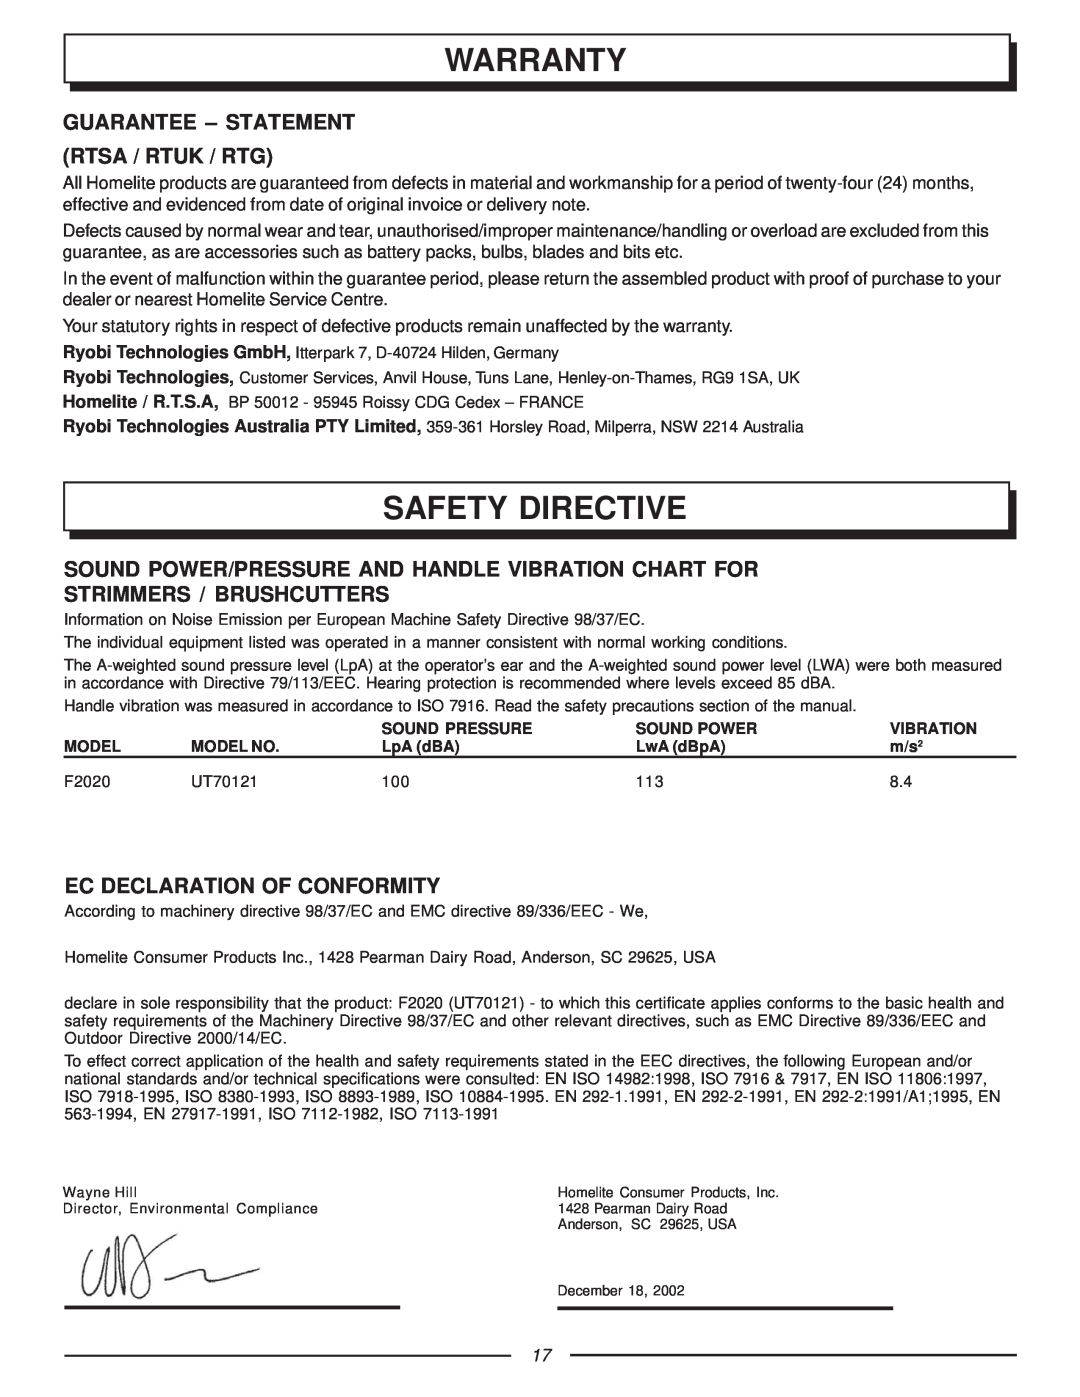 Homelite UT70121, F2020 manual Warranty, Safety Directive, Guarantee - Statement Rtsa / Rtuk / Rtg, Strimmers / Brushcutters 